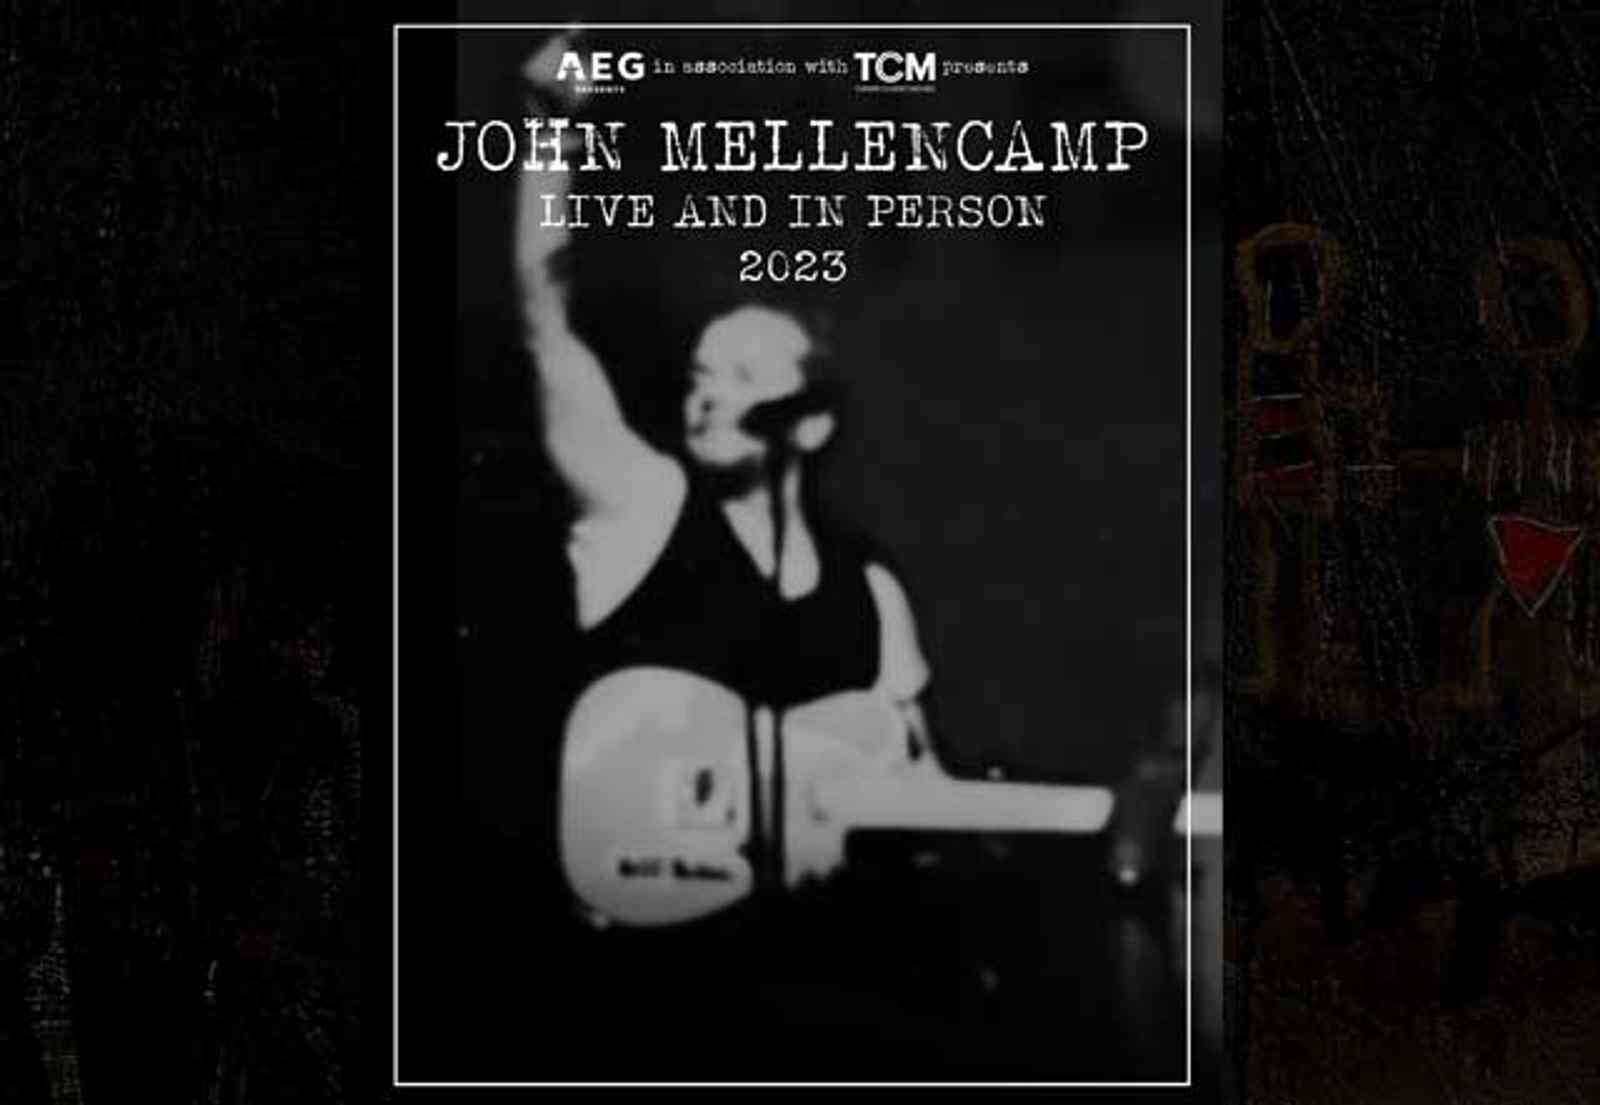 John Mellencamp Live and In Person 2023 Tour Pre - Sale Ticket Details